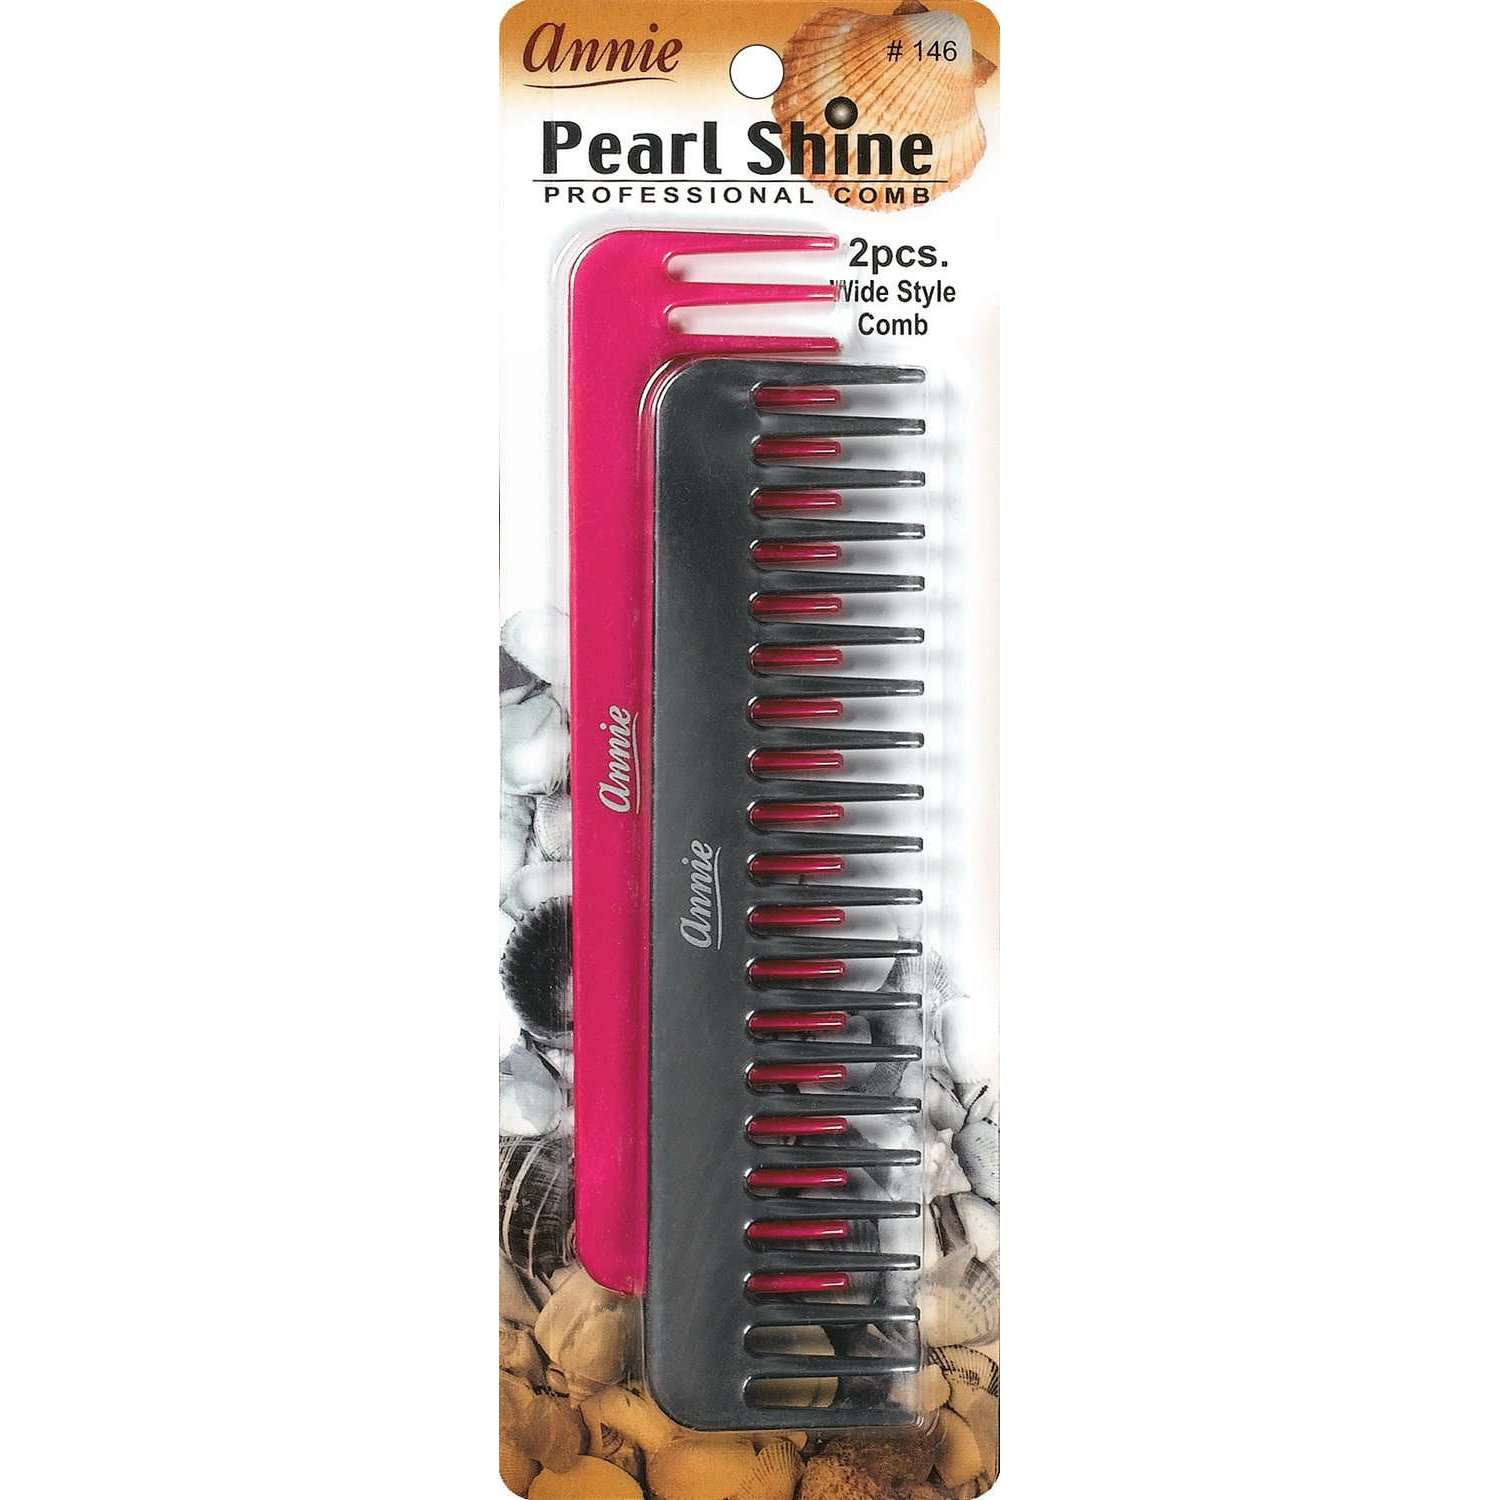 Annie Pearl Shine Comb 146, 2 Pack